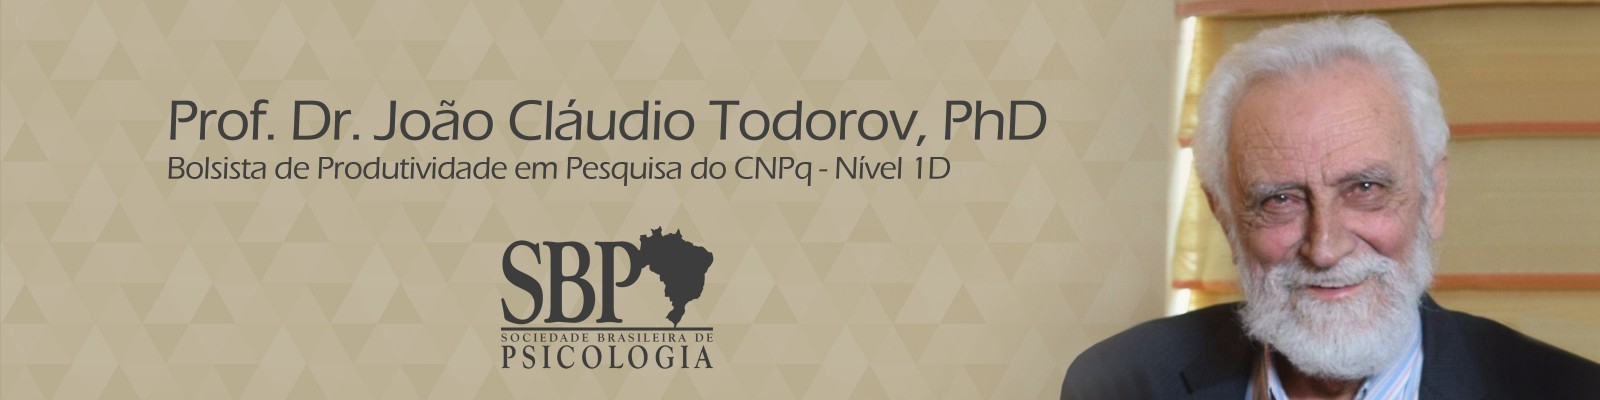 Capa_João Claudio Todorov